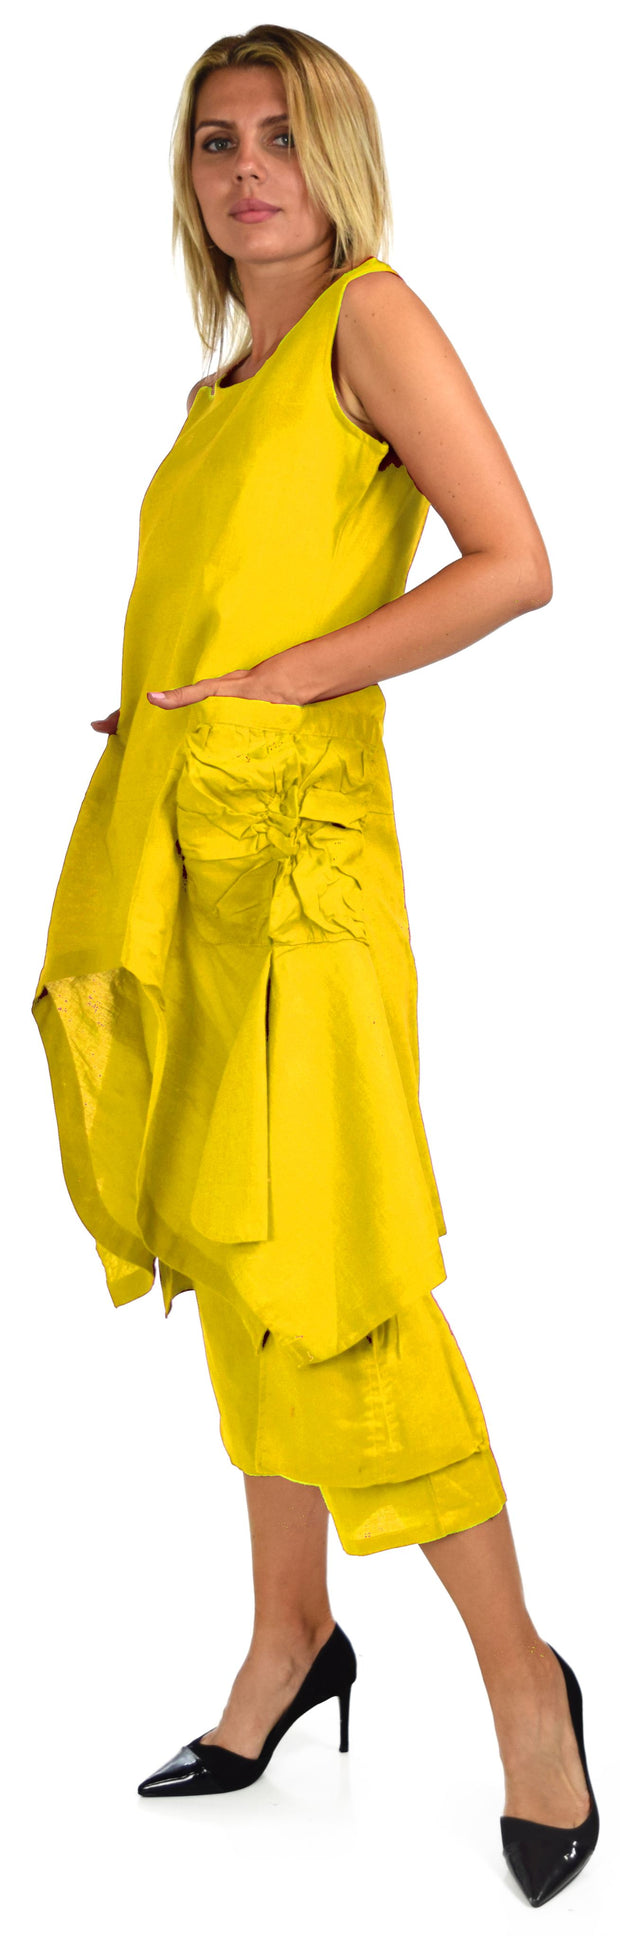 Women's 2 Piece Linen Summer Pants and Sleeveless Top Set, Regular and Plus Sizes